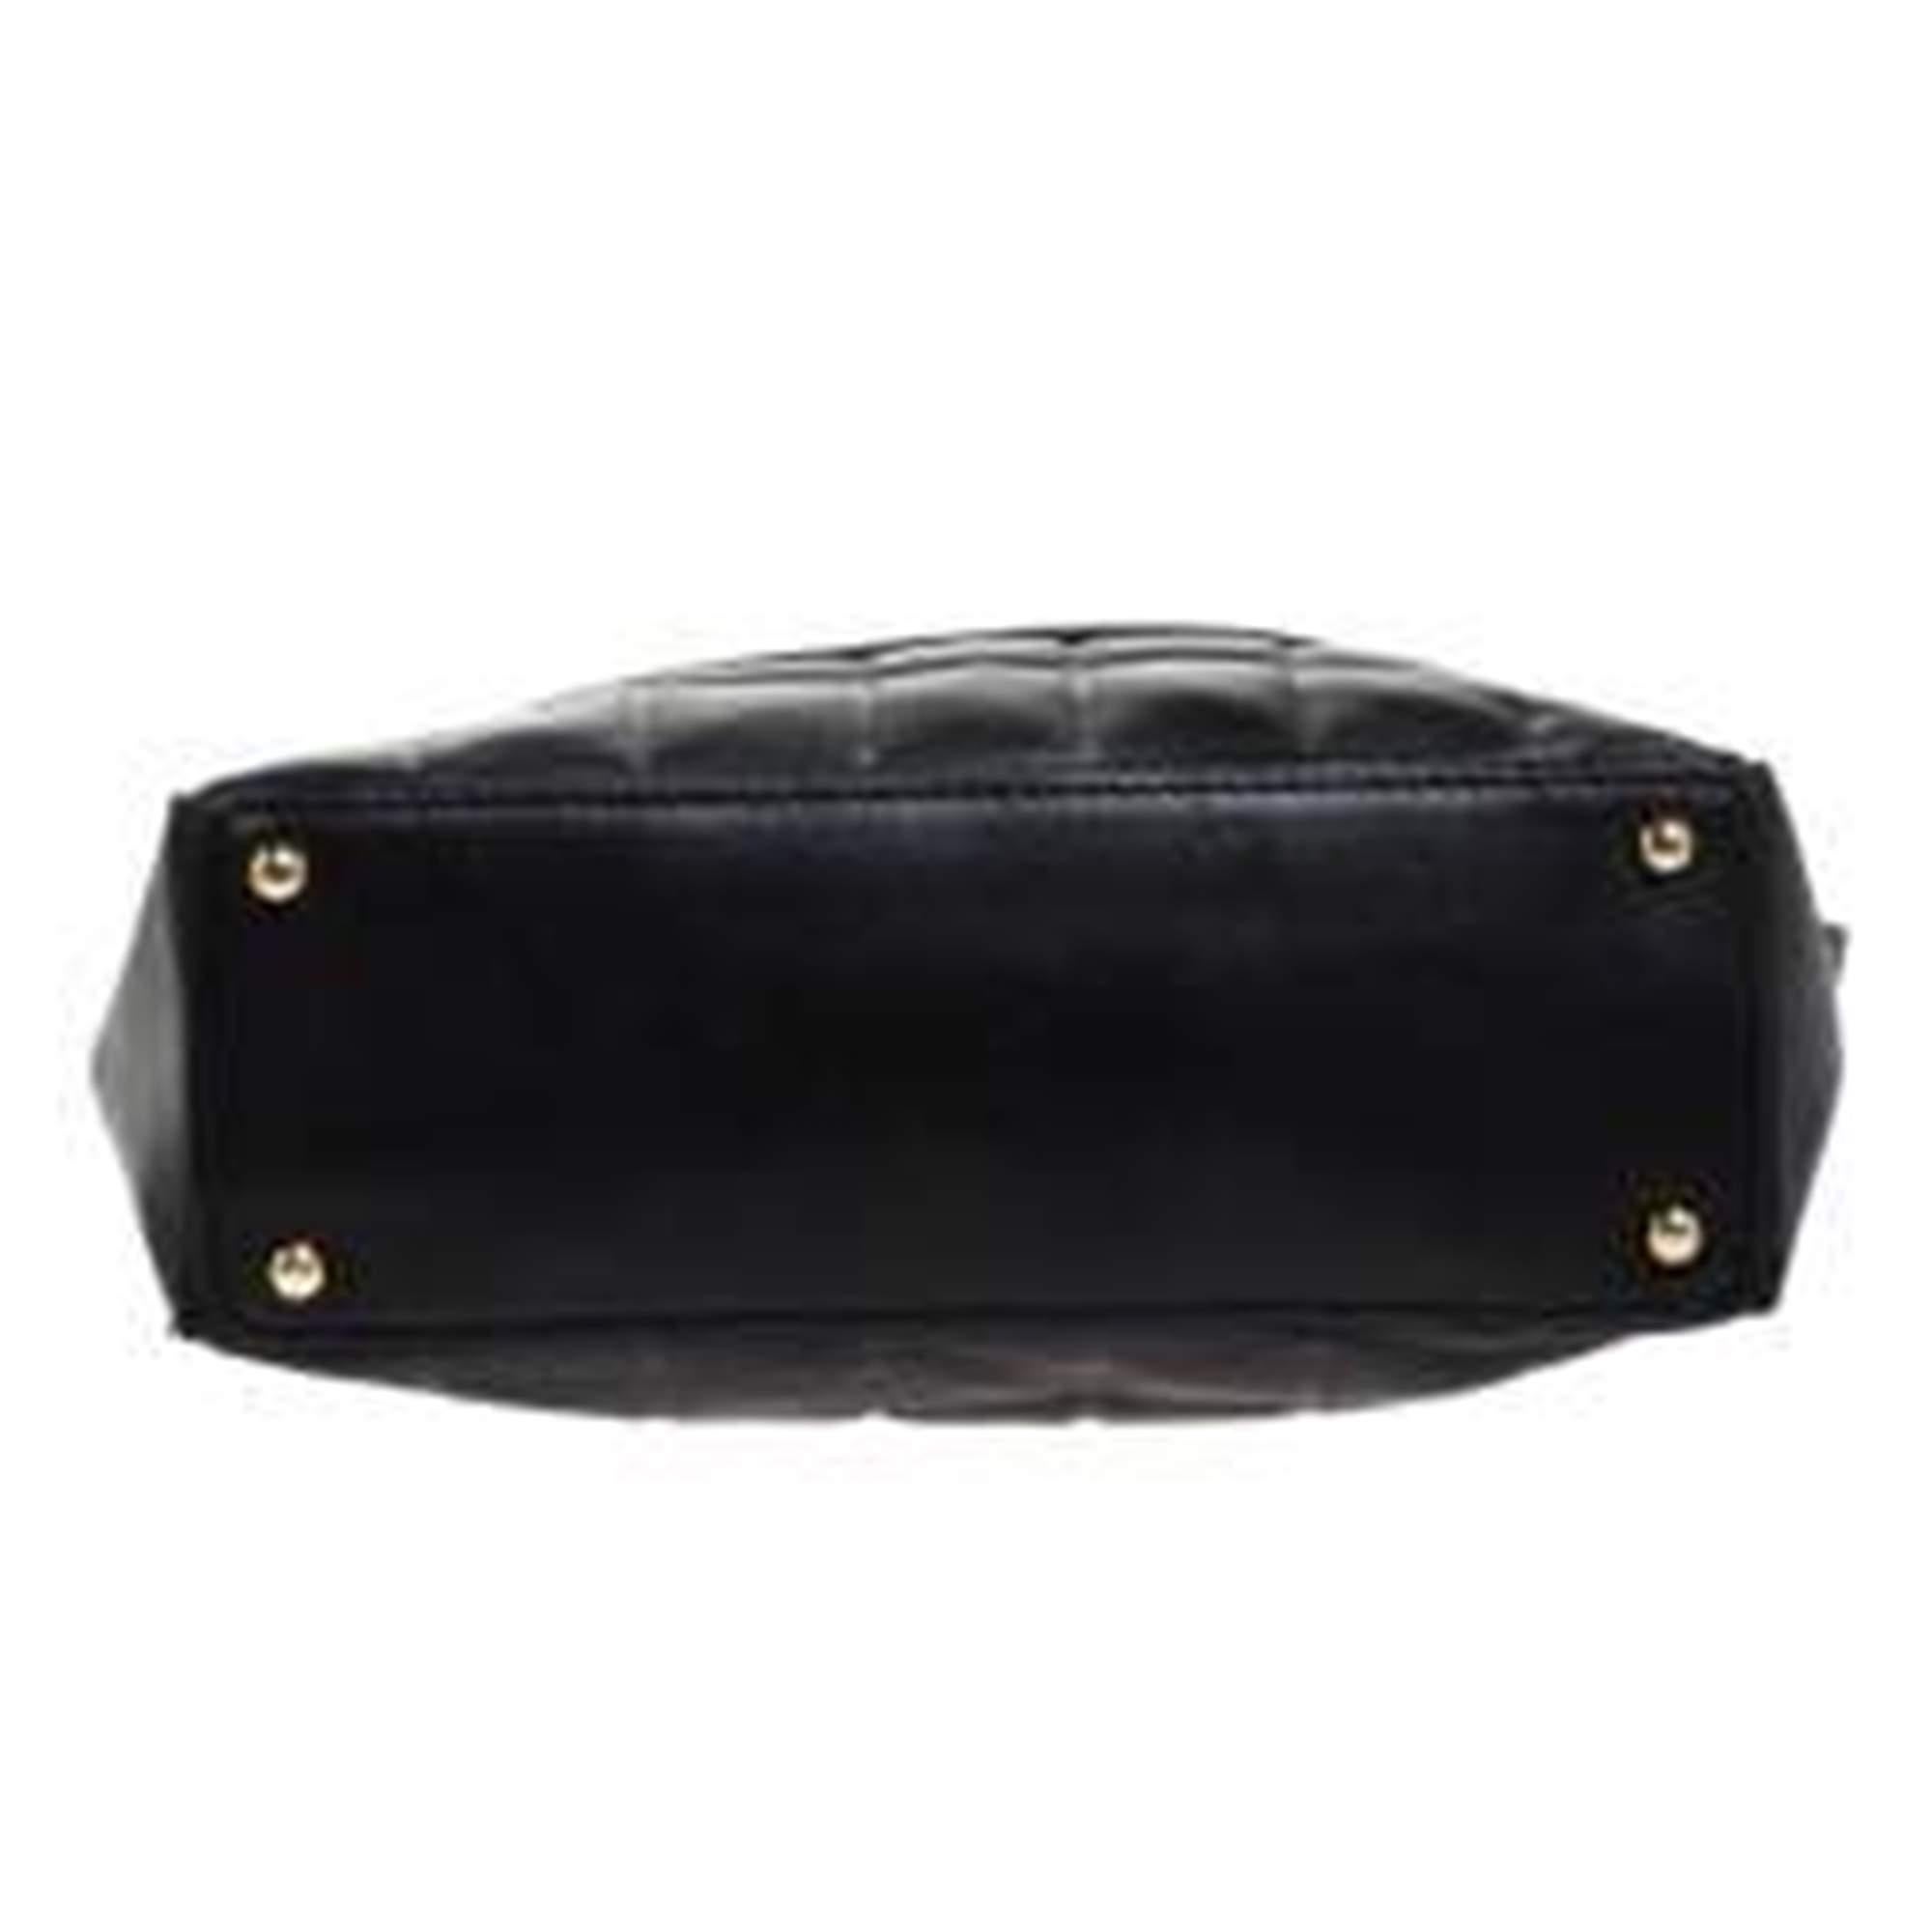 Chanel Black Leather Small Chocolate Bar Shoulder Bag 1